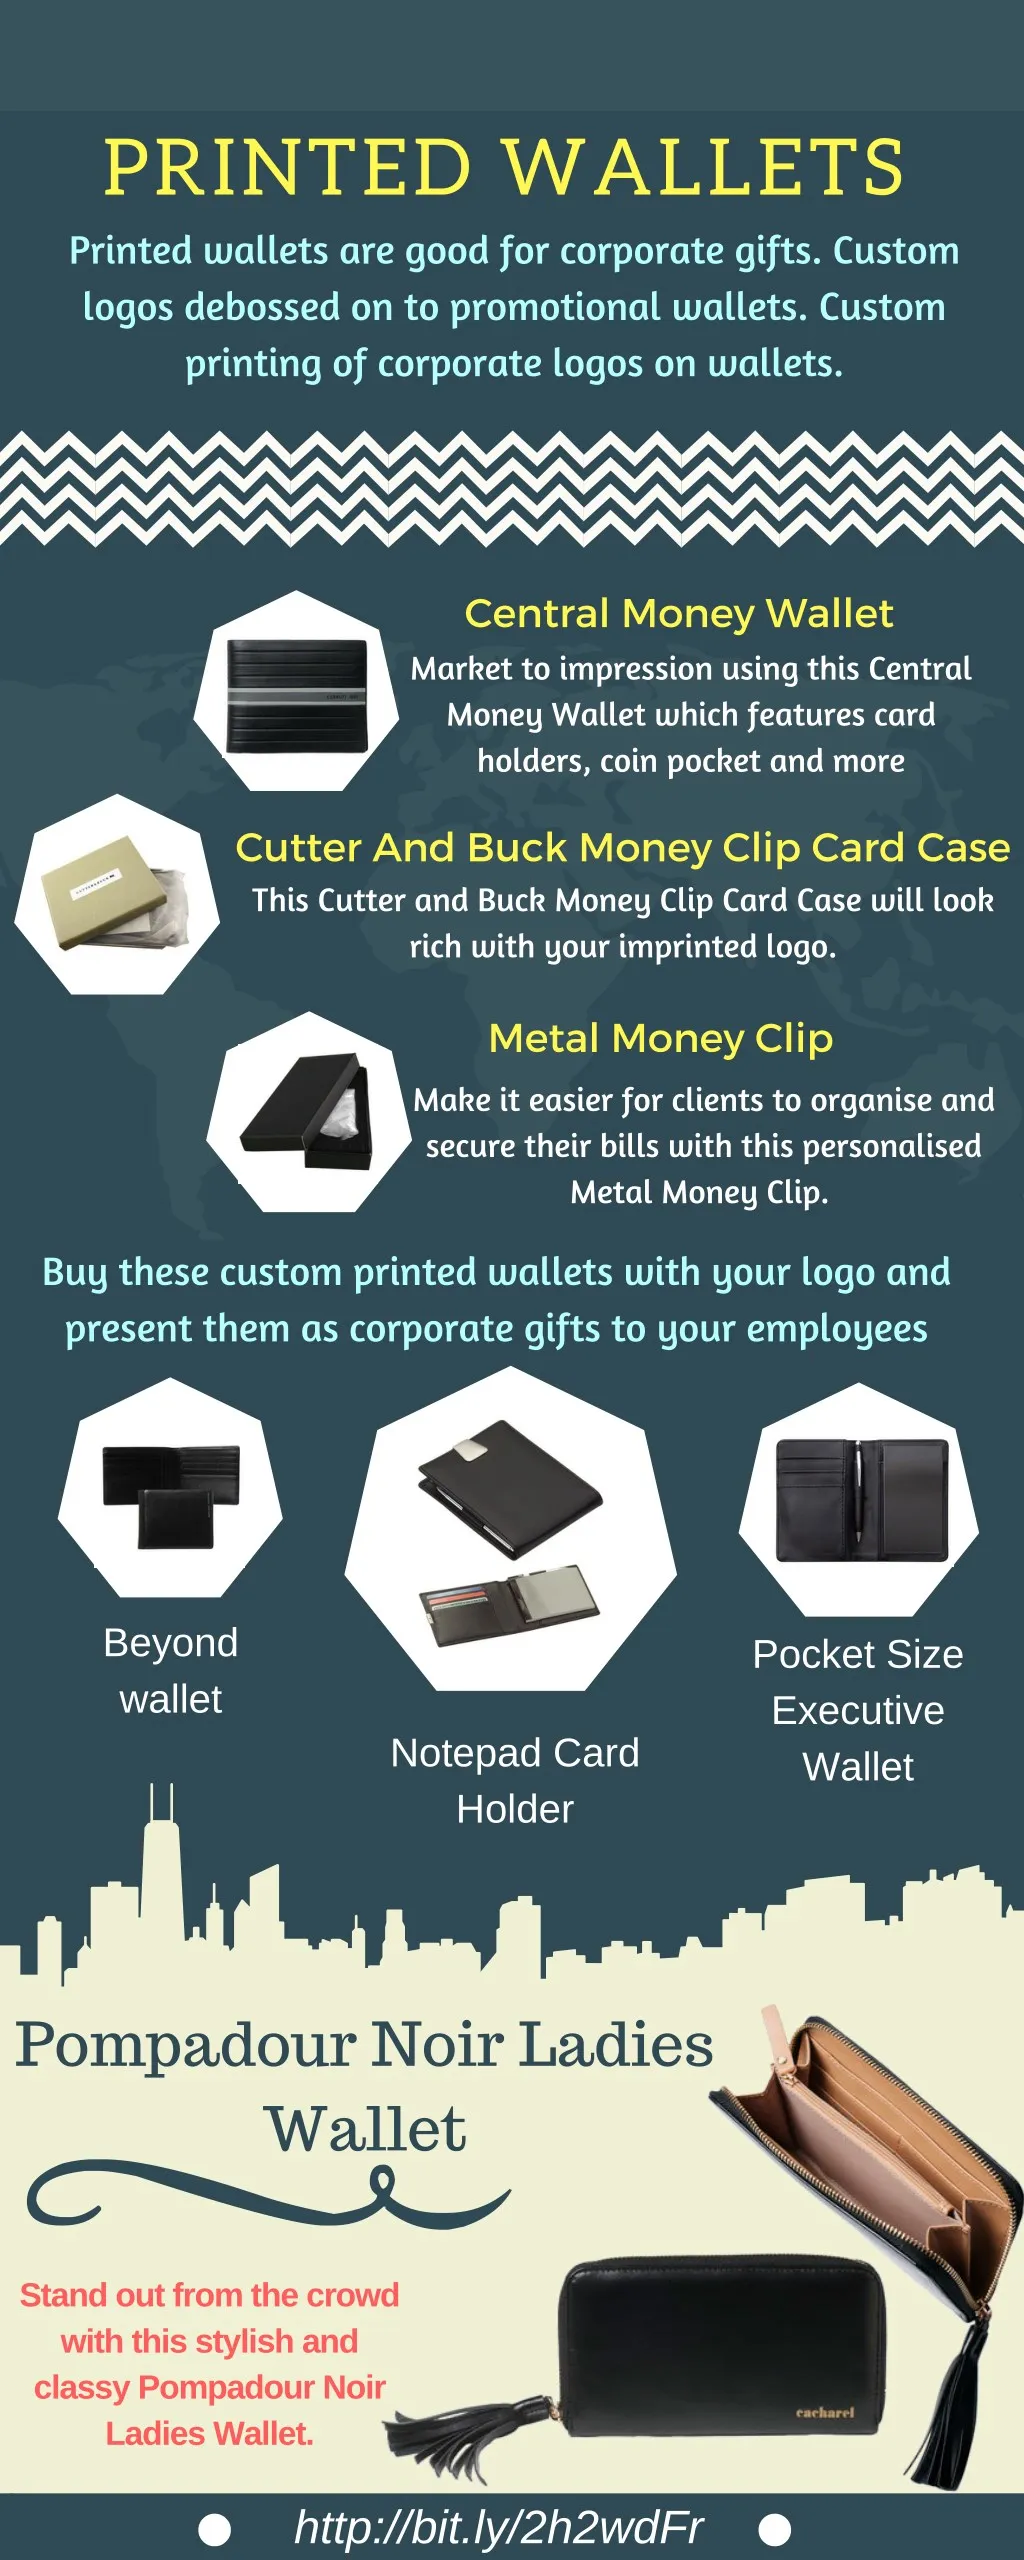 printed wallets